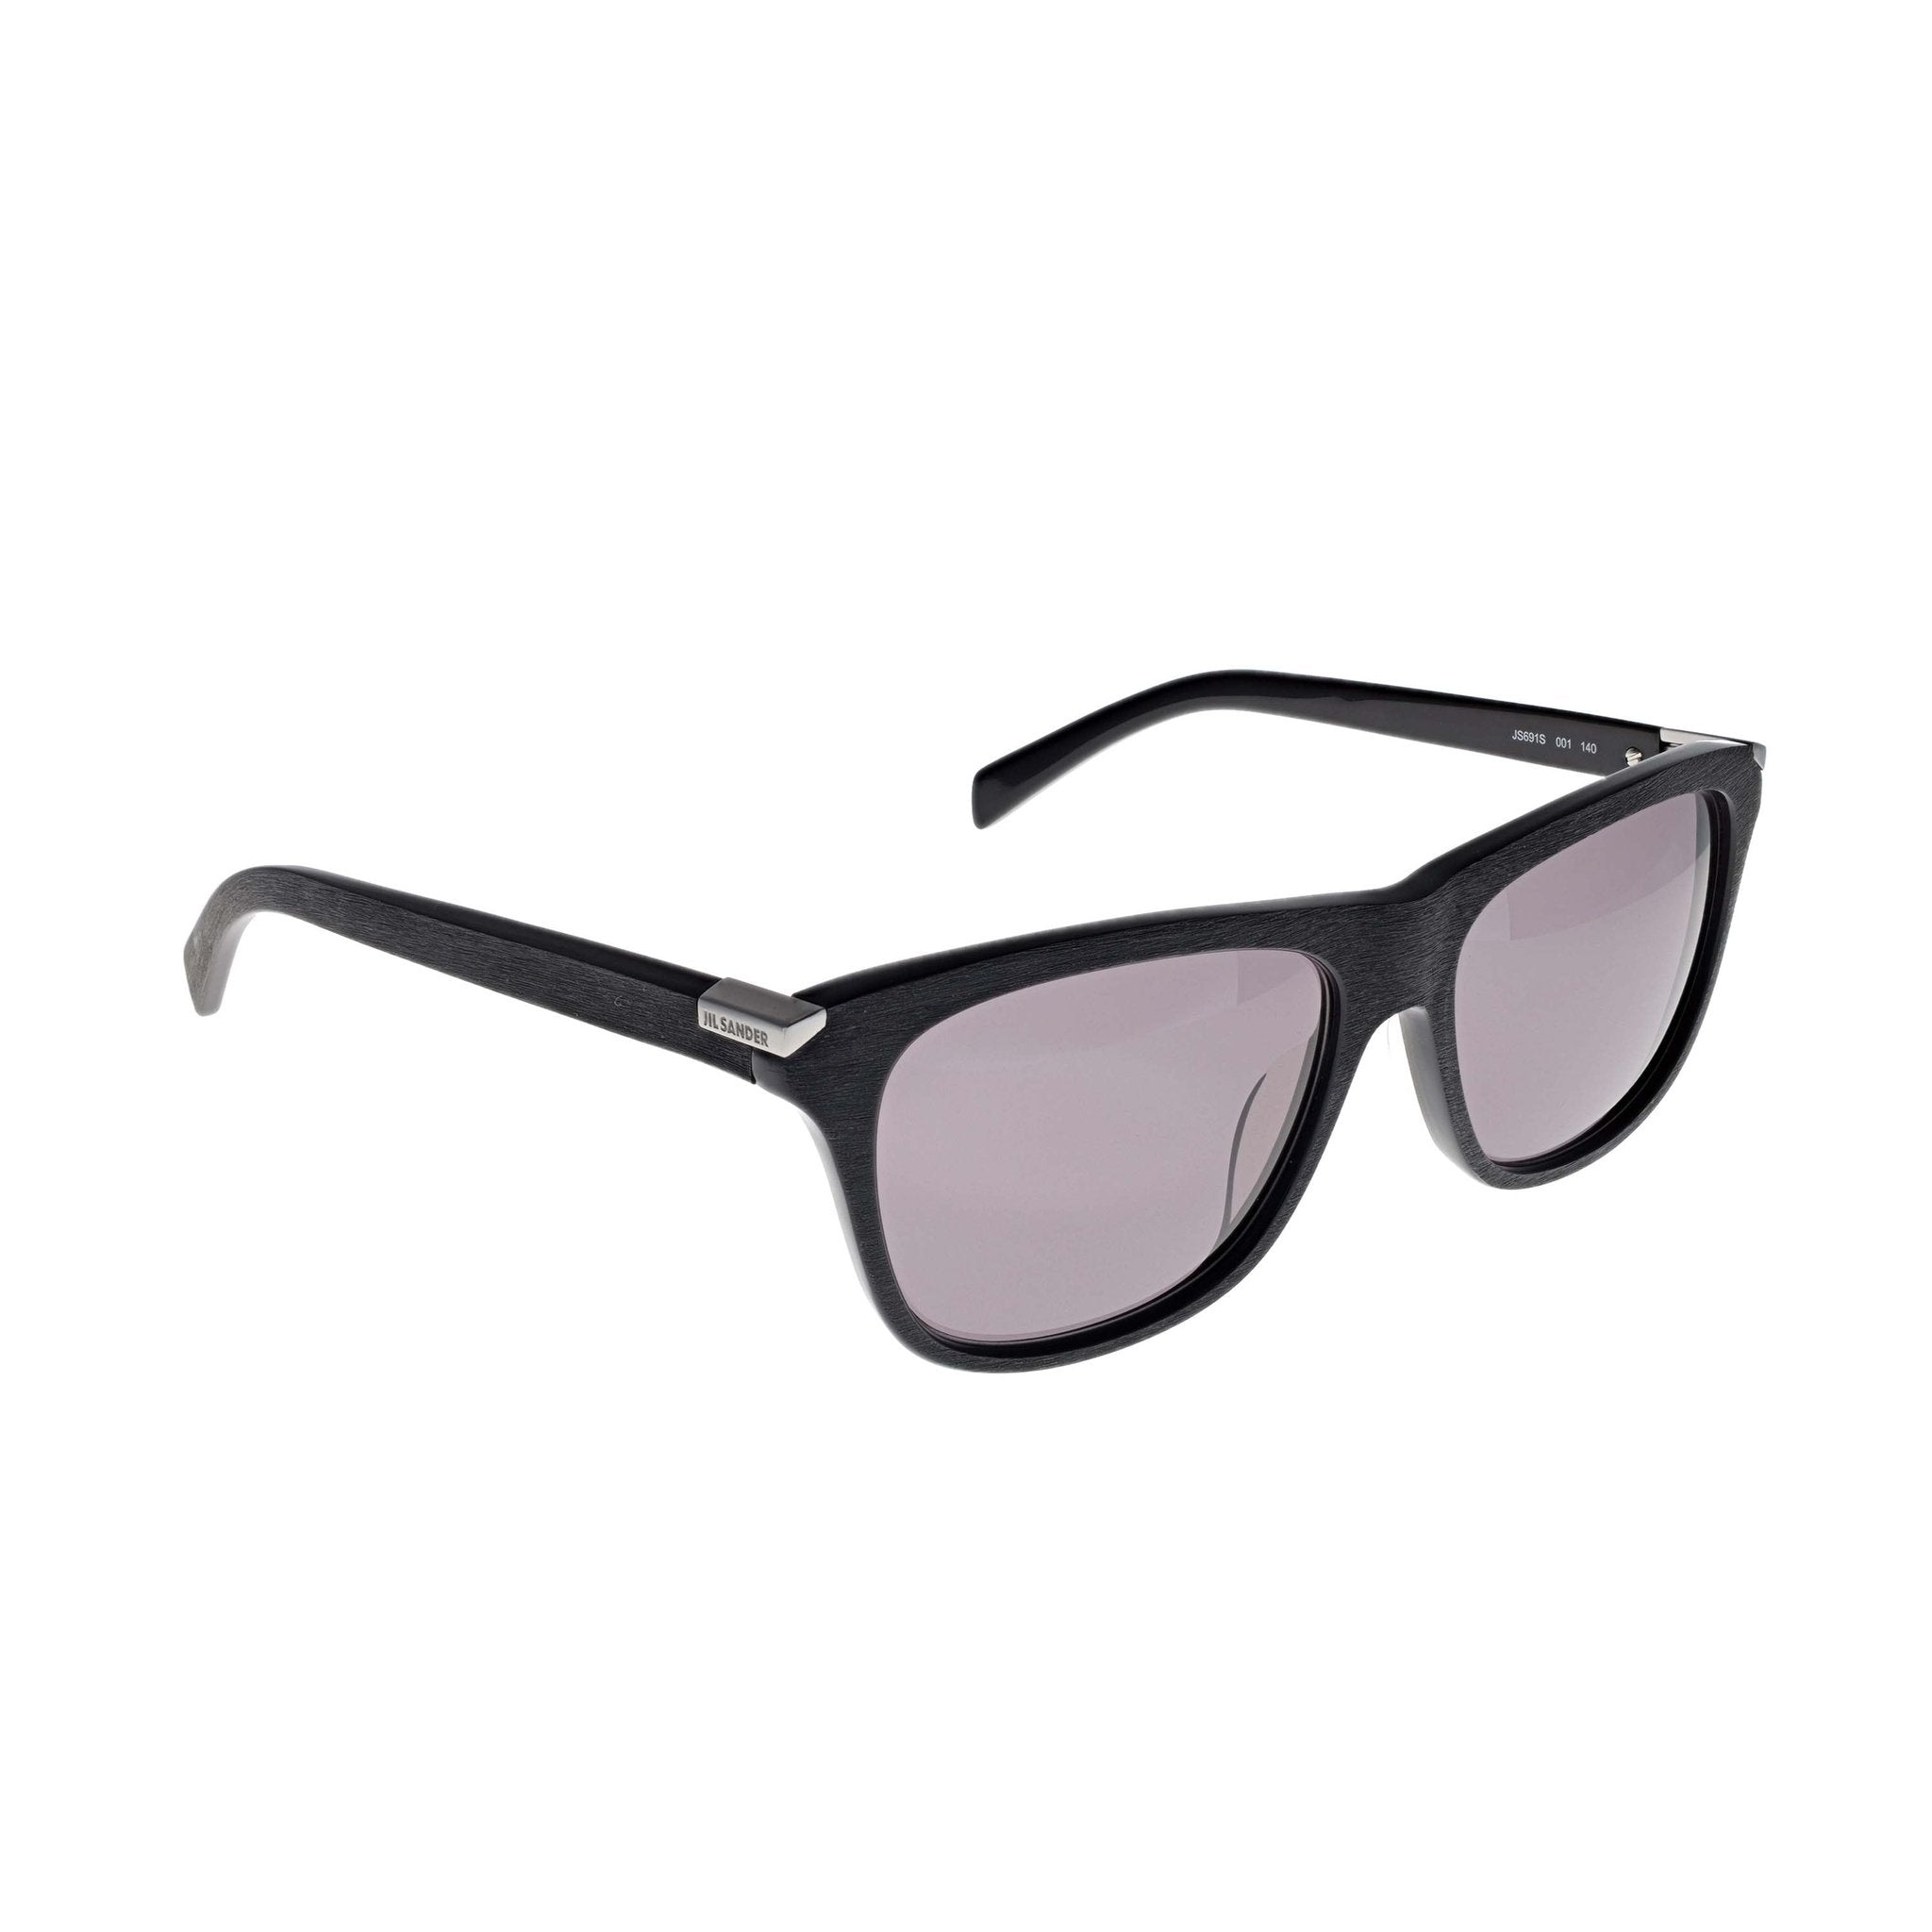 Jil Sander Sunglasses - JS691S - Black